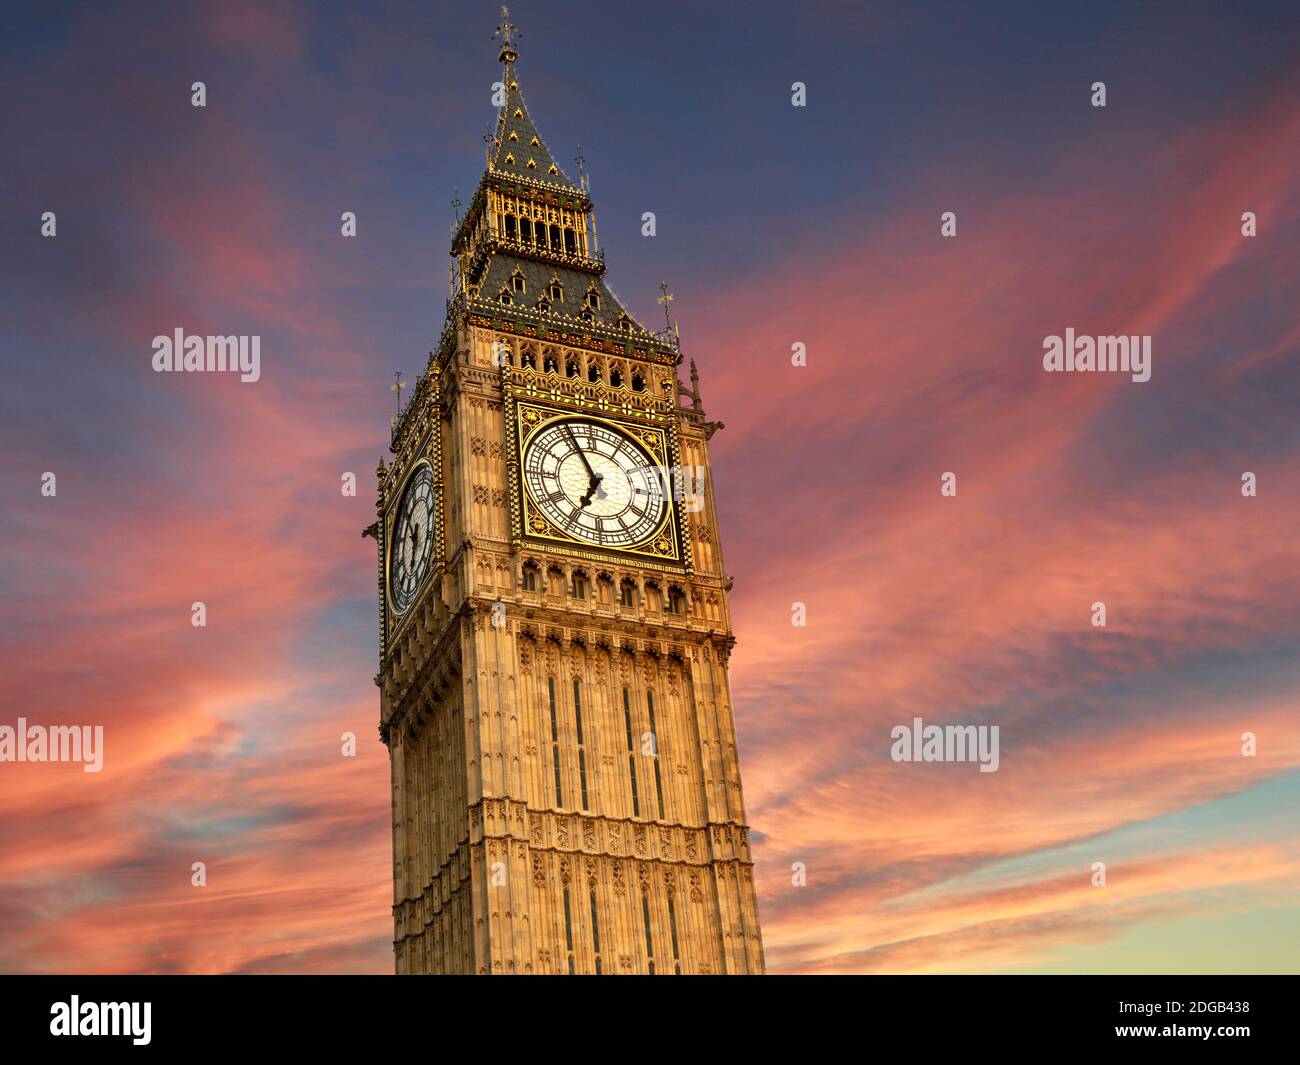 BIG BEN SONNENUNTERGANG UHR TURM PARLAMENT Sonnenuntergang Himmel hinter 18.55 Uhr der Clock Tower Big Ben bei Sonnenuntergang Westminster London VEREINIGTES KÖNIGREICH Stockfoto